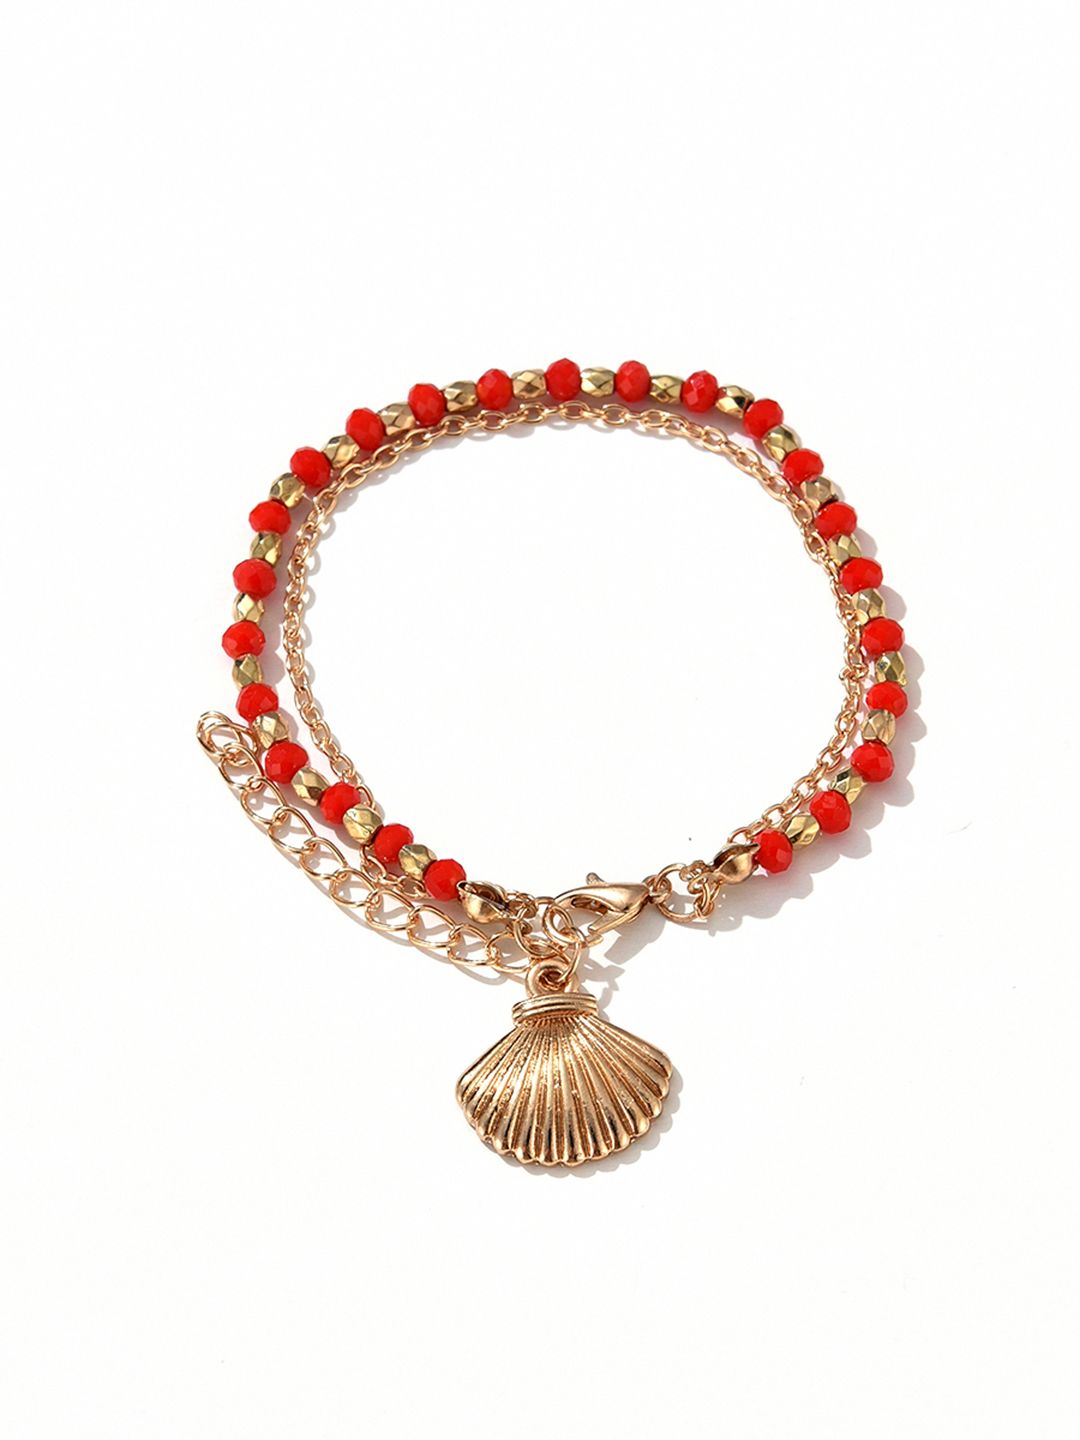 URBANIC Women Gold-Toned & Red Shell Charm Beaded Bracelet Price in India